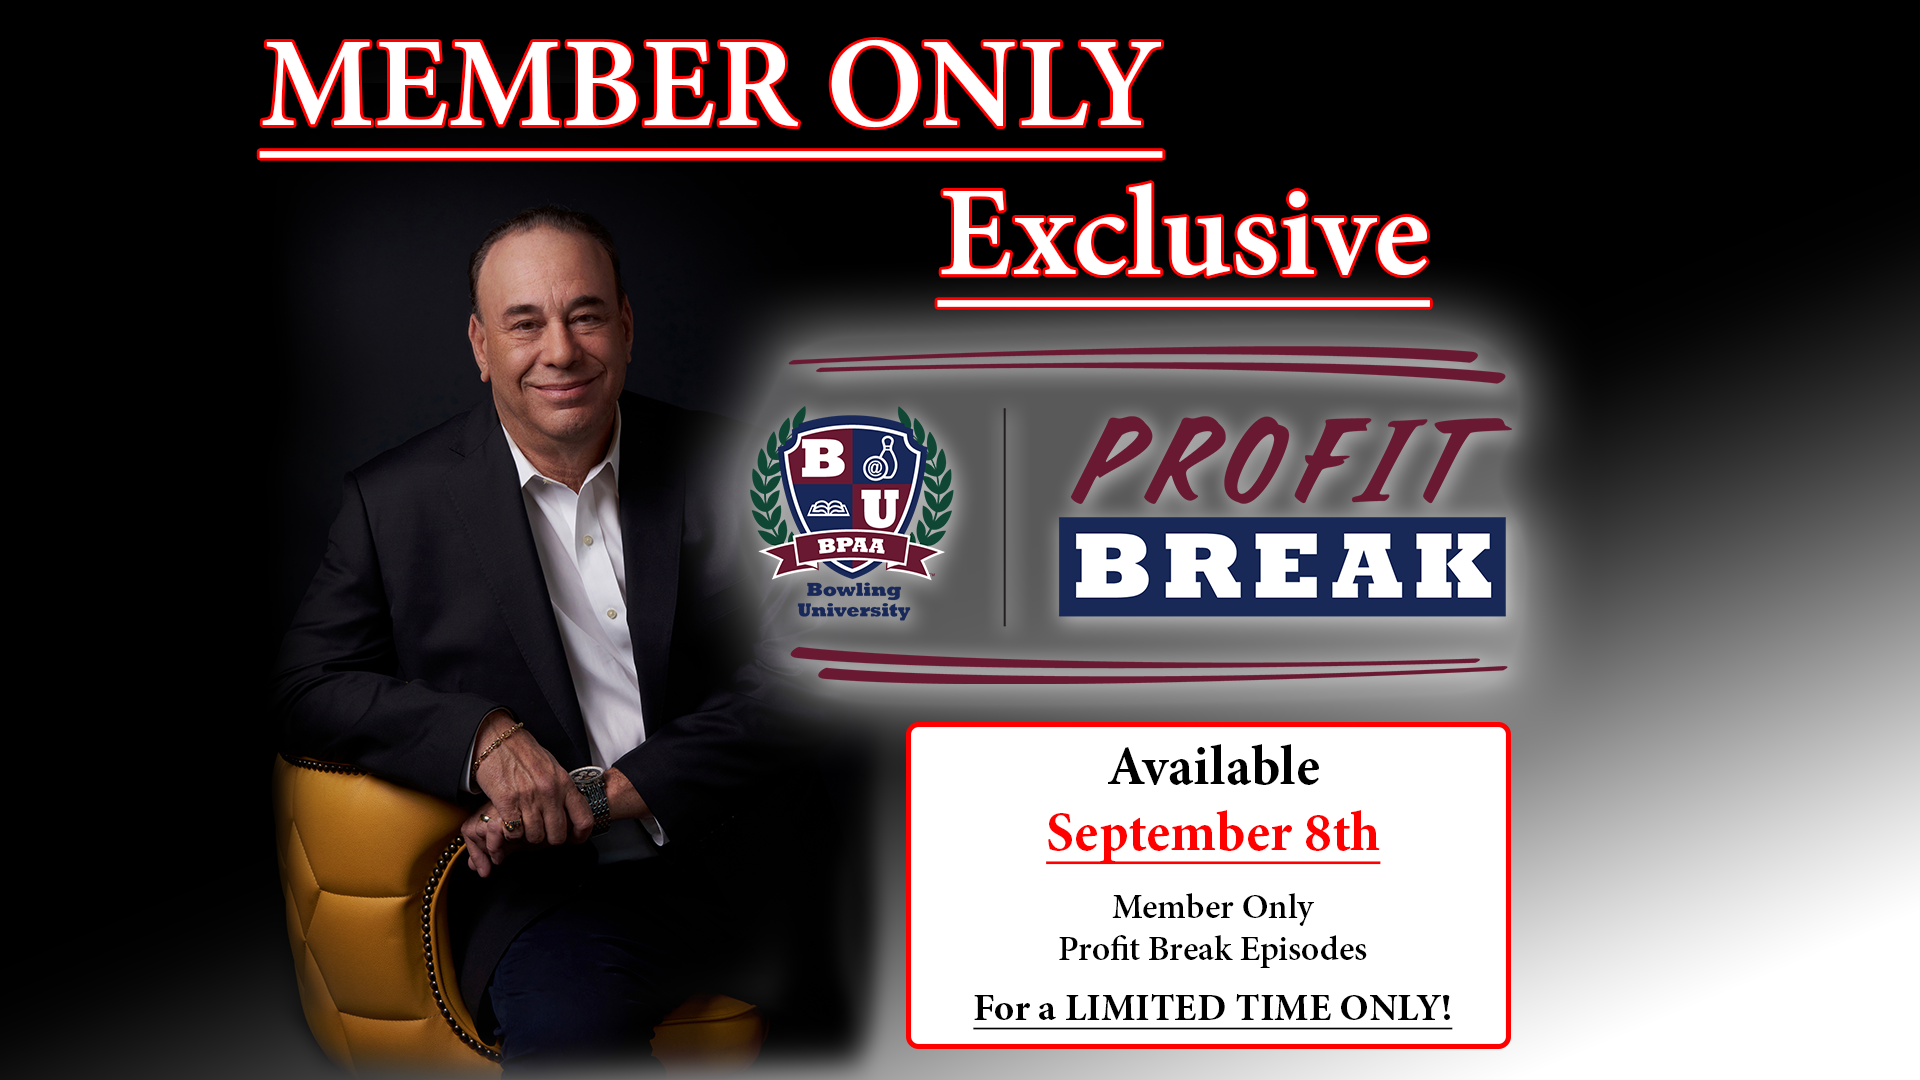 Profit Break Exclusive Member Only Episodes